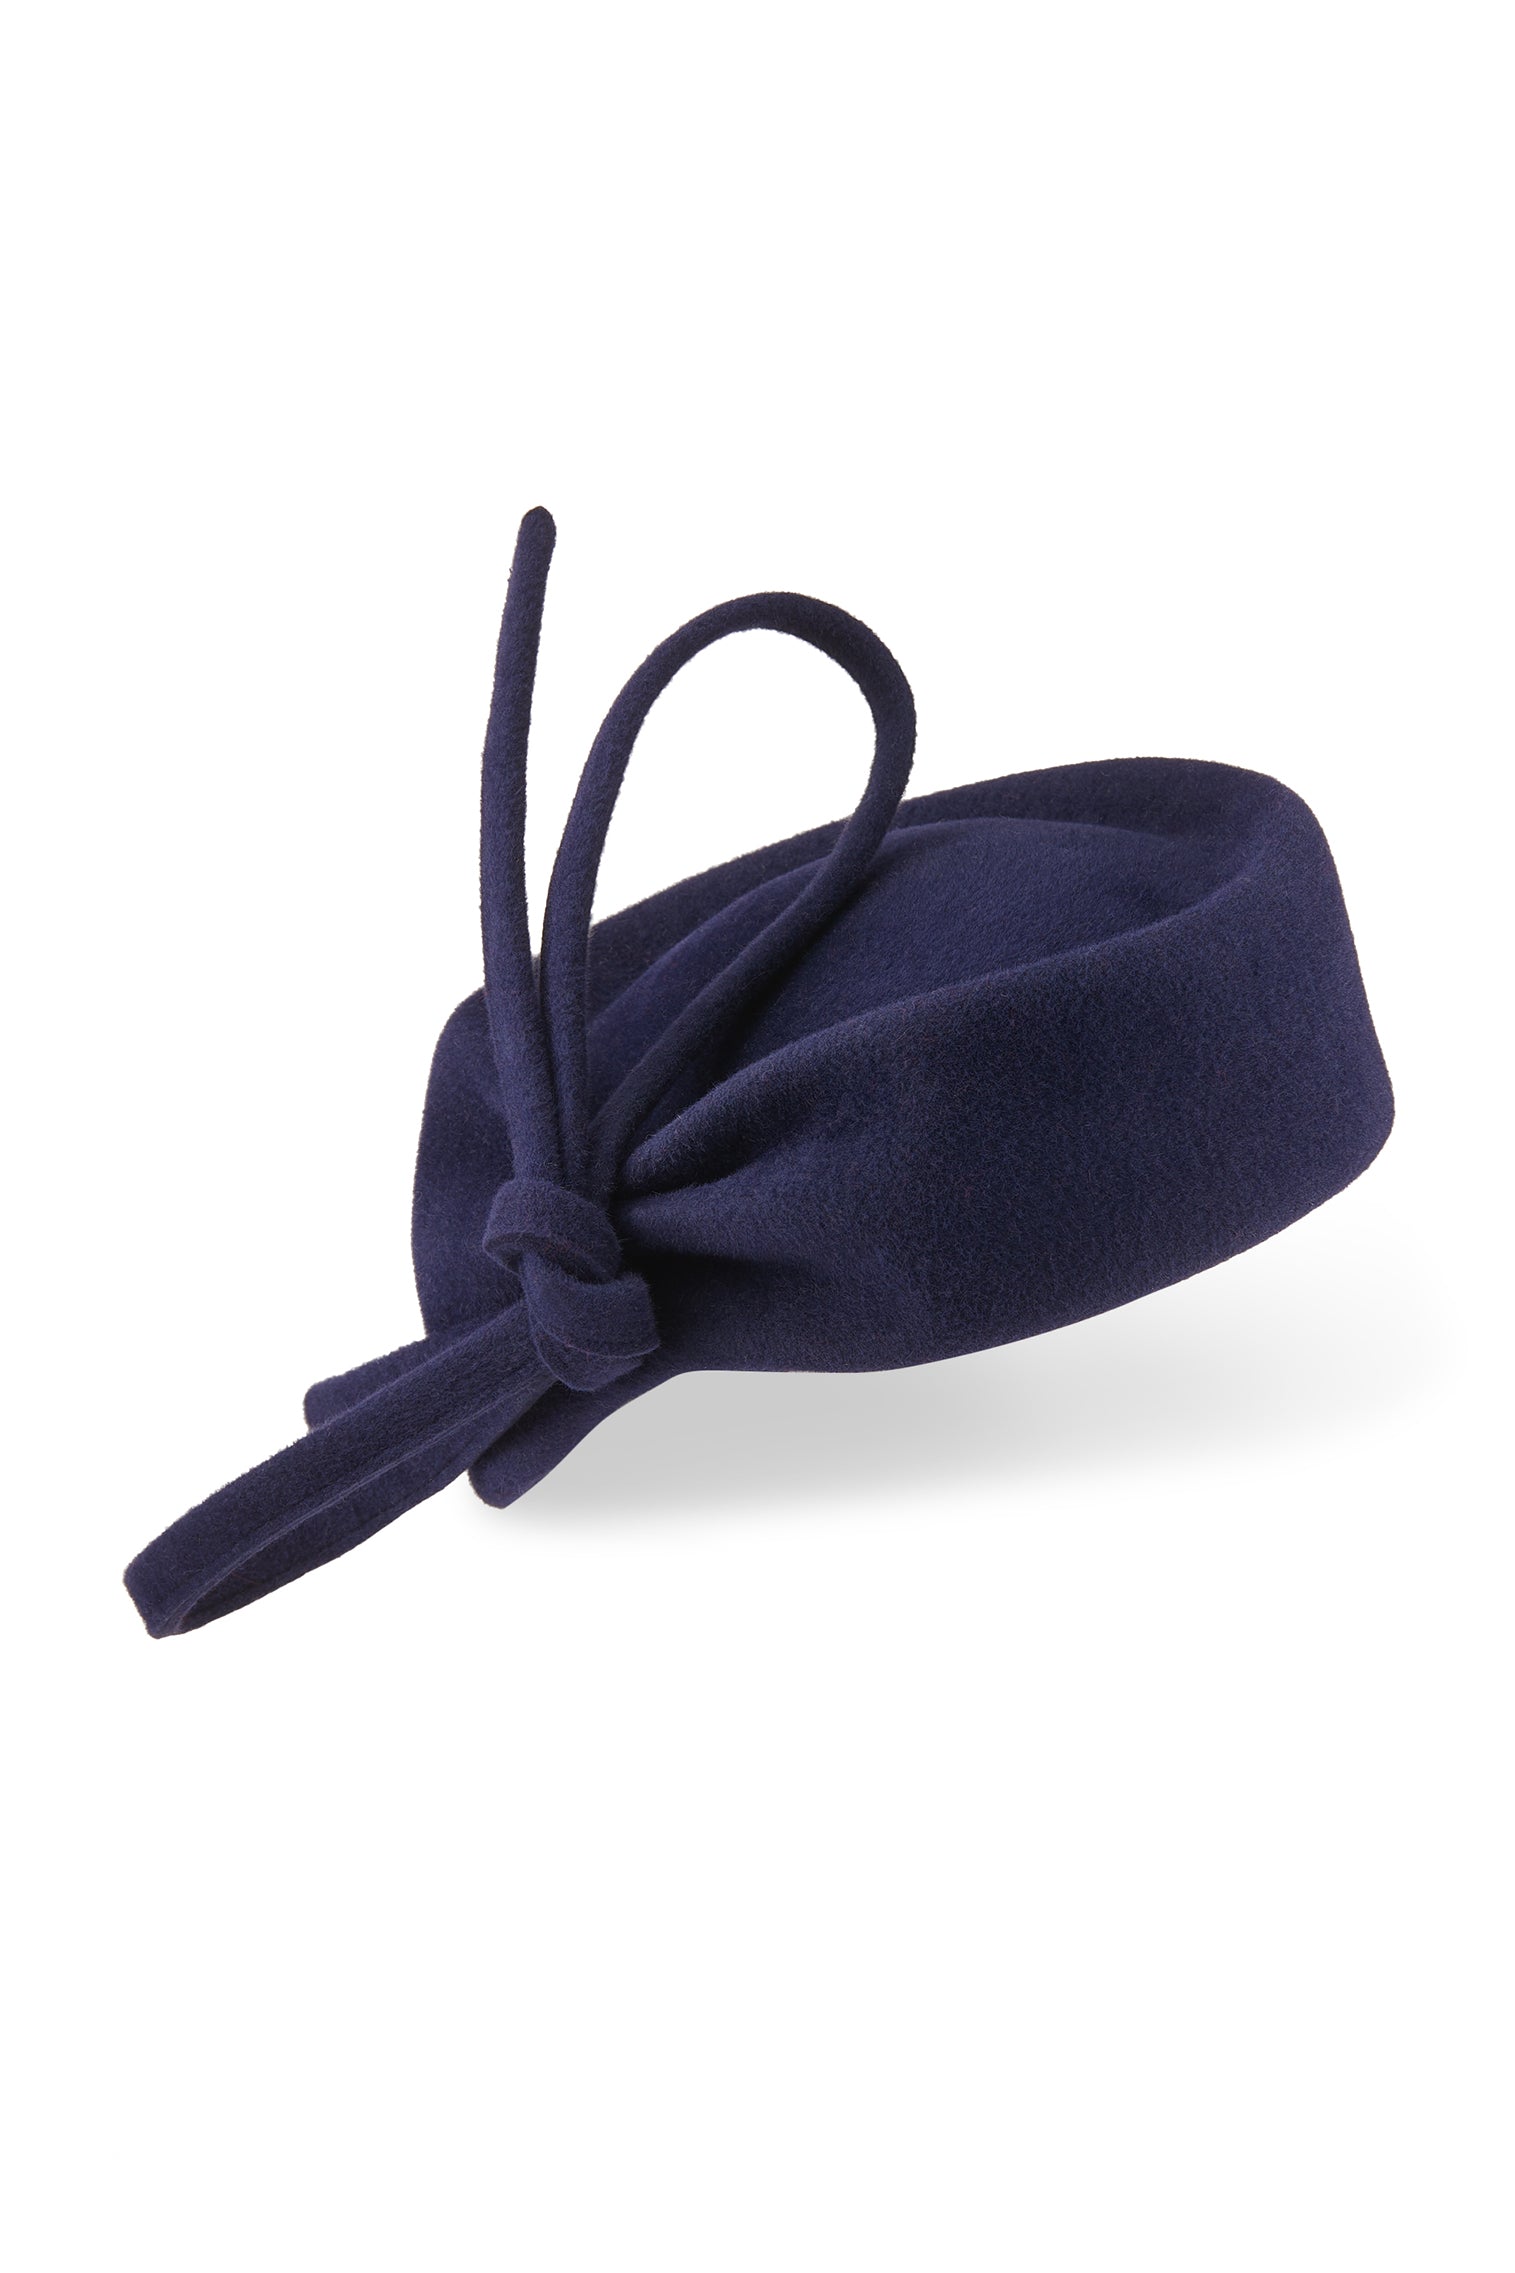 Mayfair Navy Pillbox Hat - Pillbox Hats for Women - Lock & Co. Hatters London UK